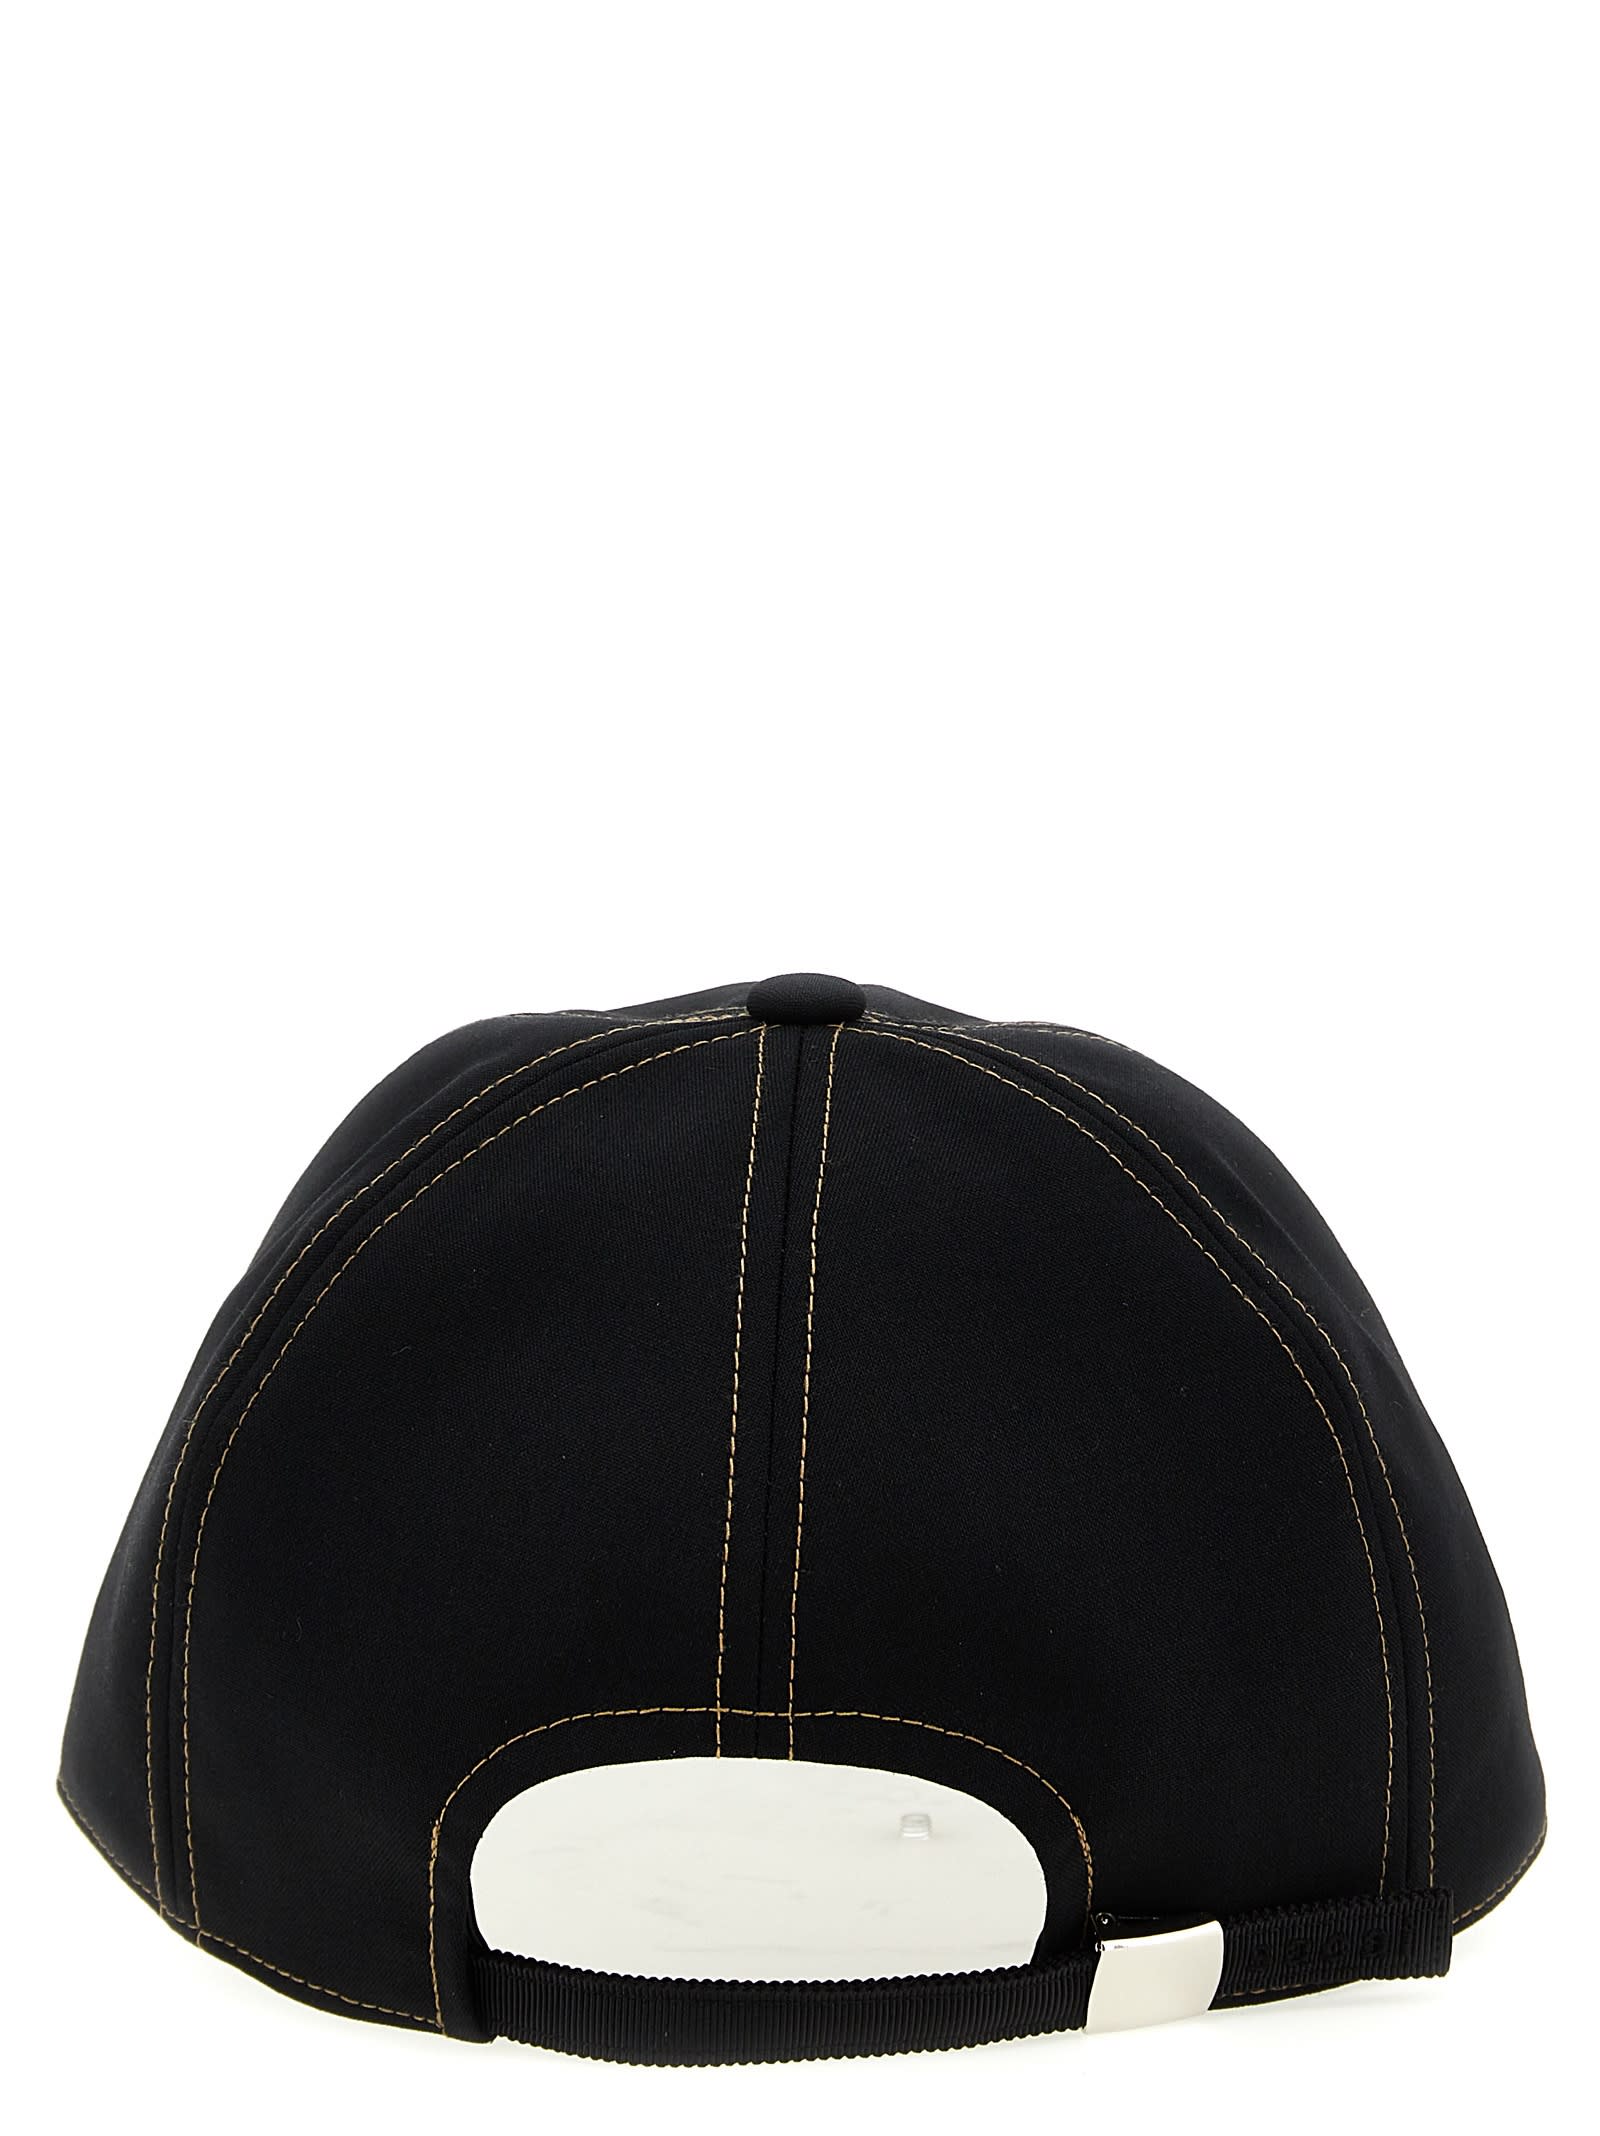 Shop Sacai X Carhartt Wip Cap In Black